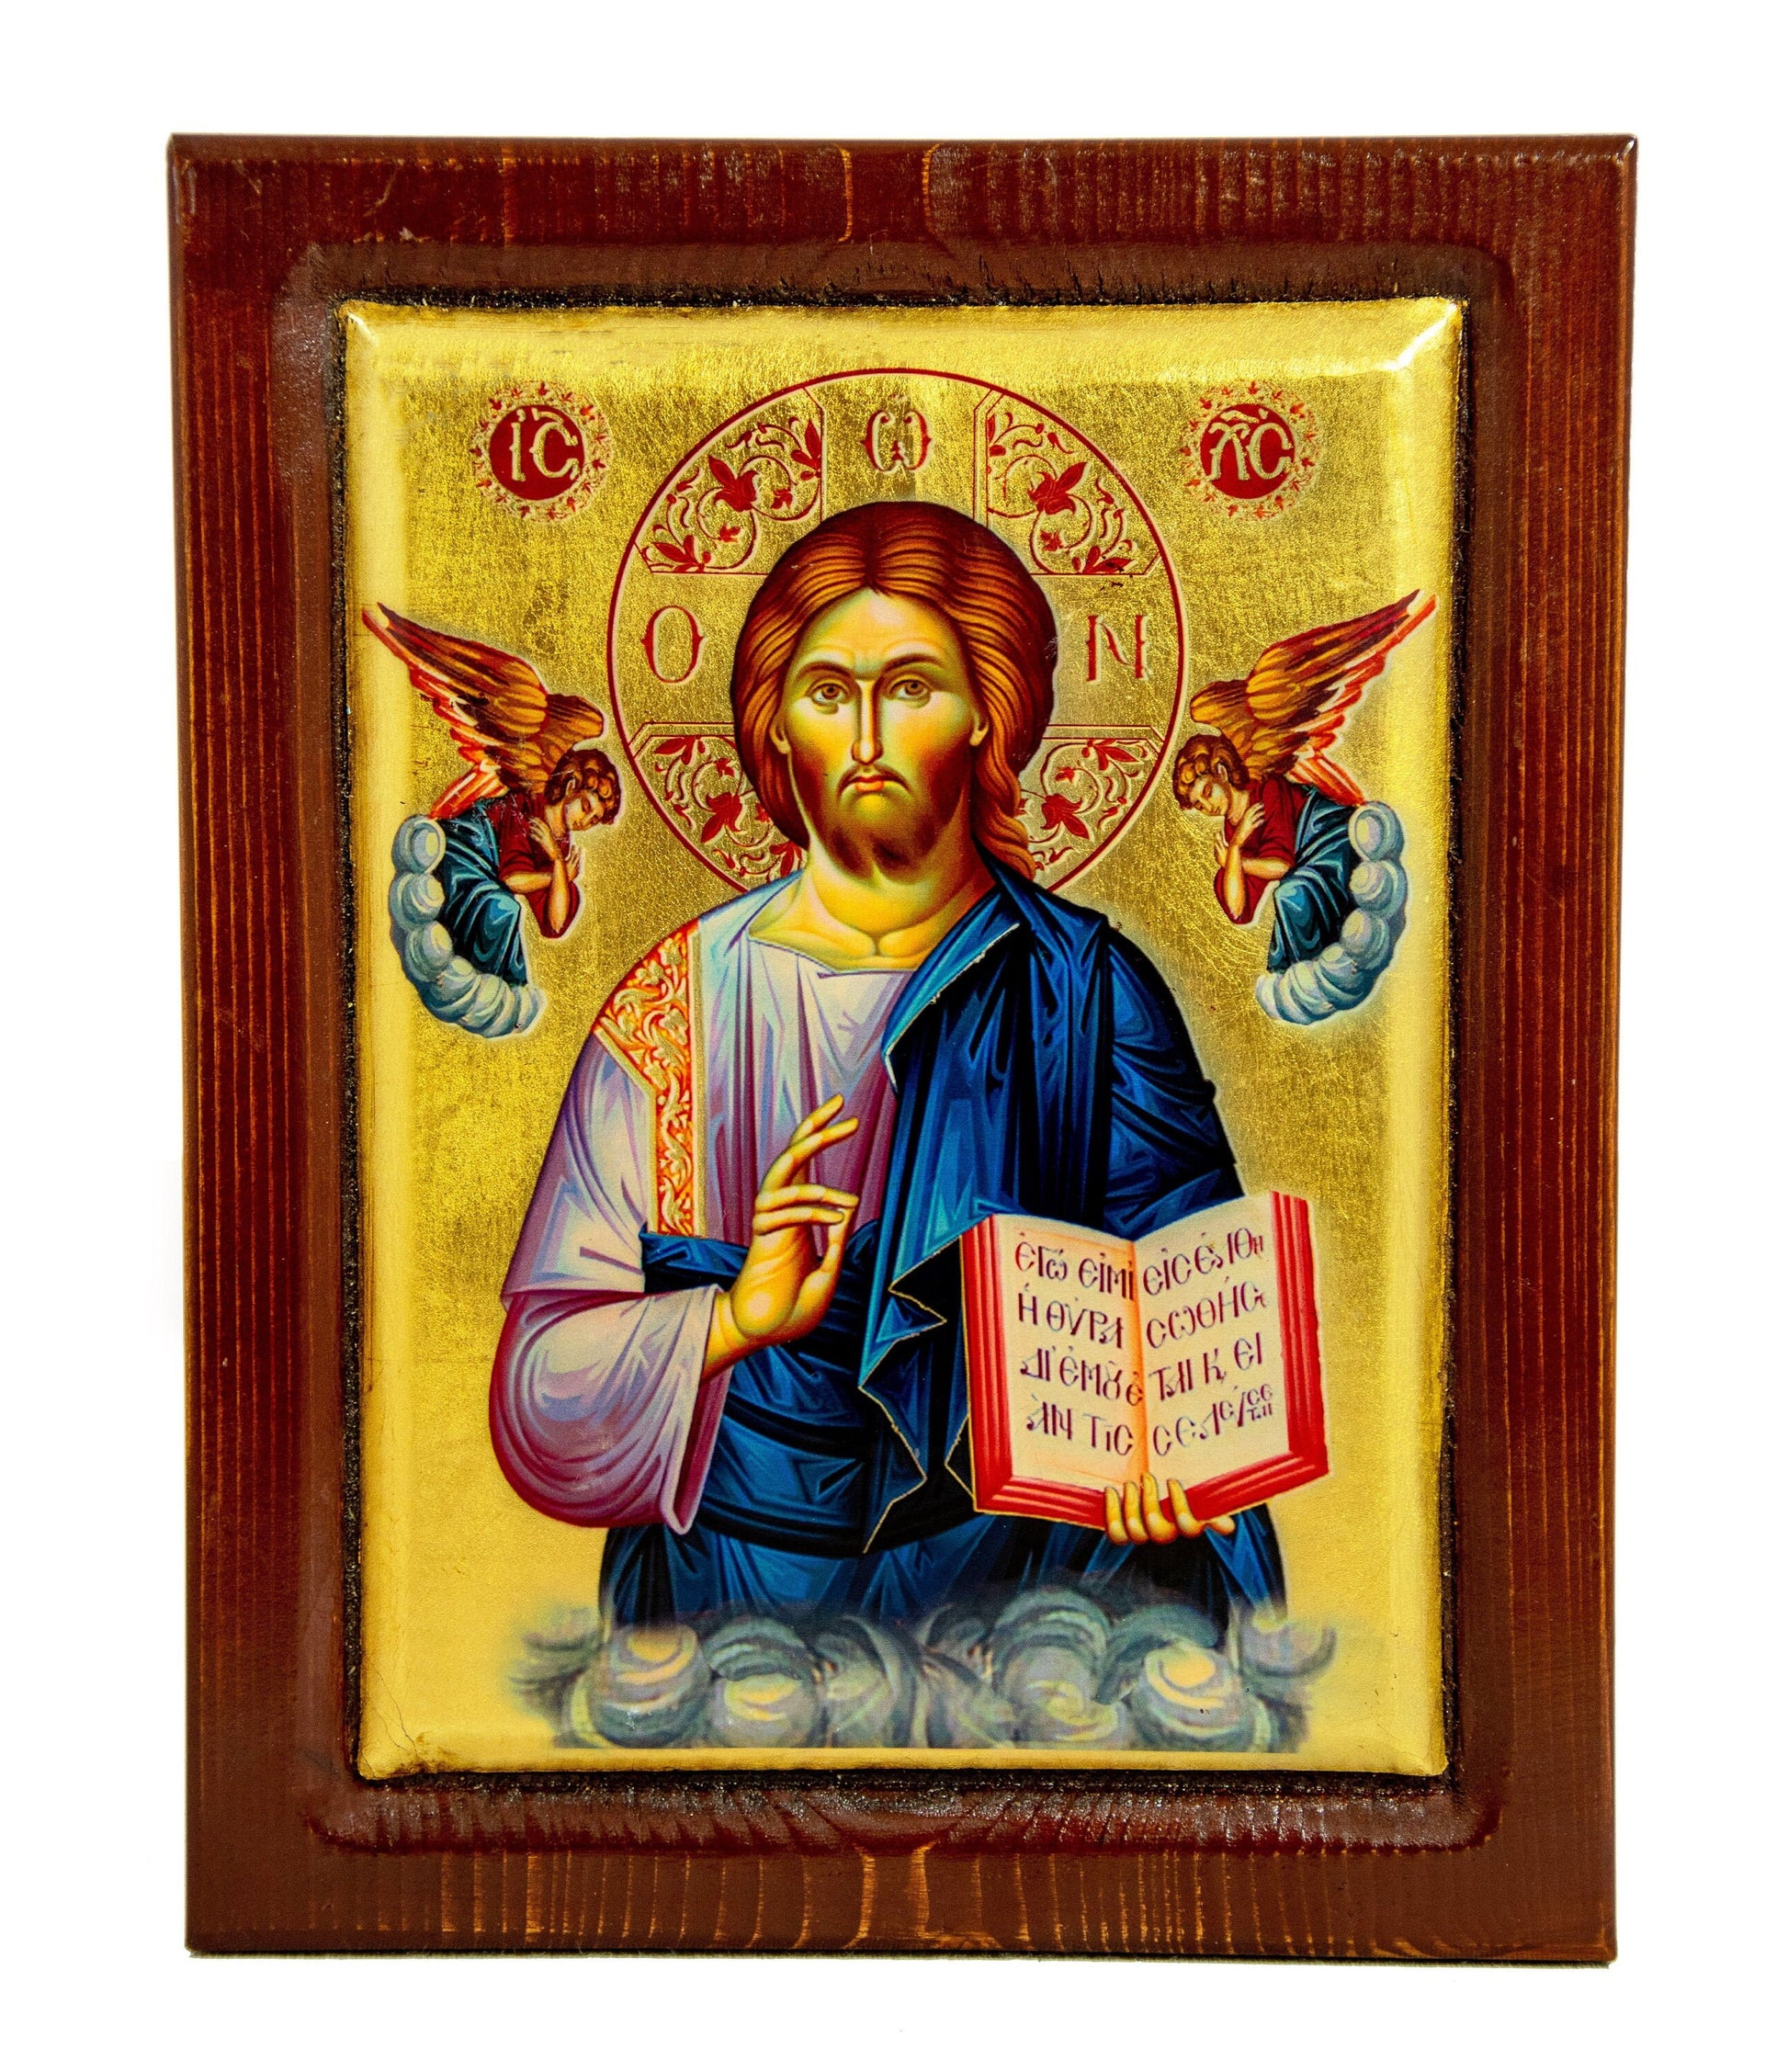 Jesus Christ icon, Handmade Greek Orthodox icon, Byzantine art wall hanging serigraphy icon w/ gold leaf wood plaque, religious gift TheHolyArt